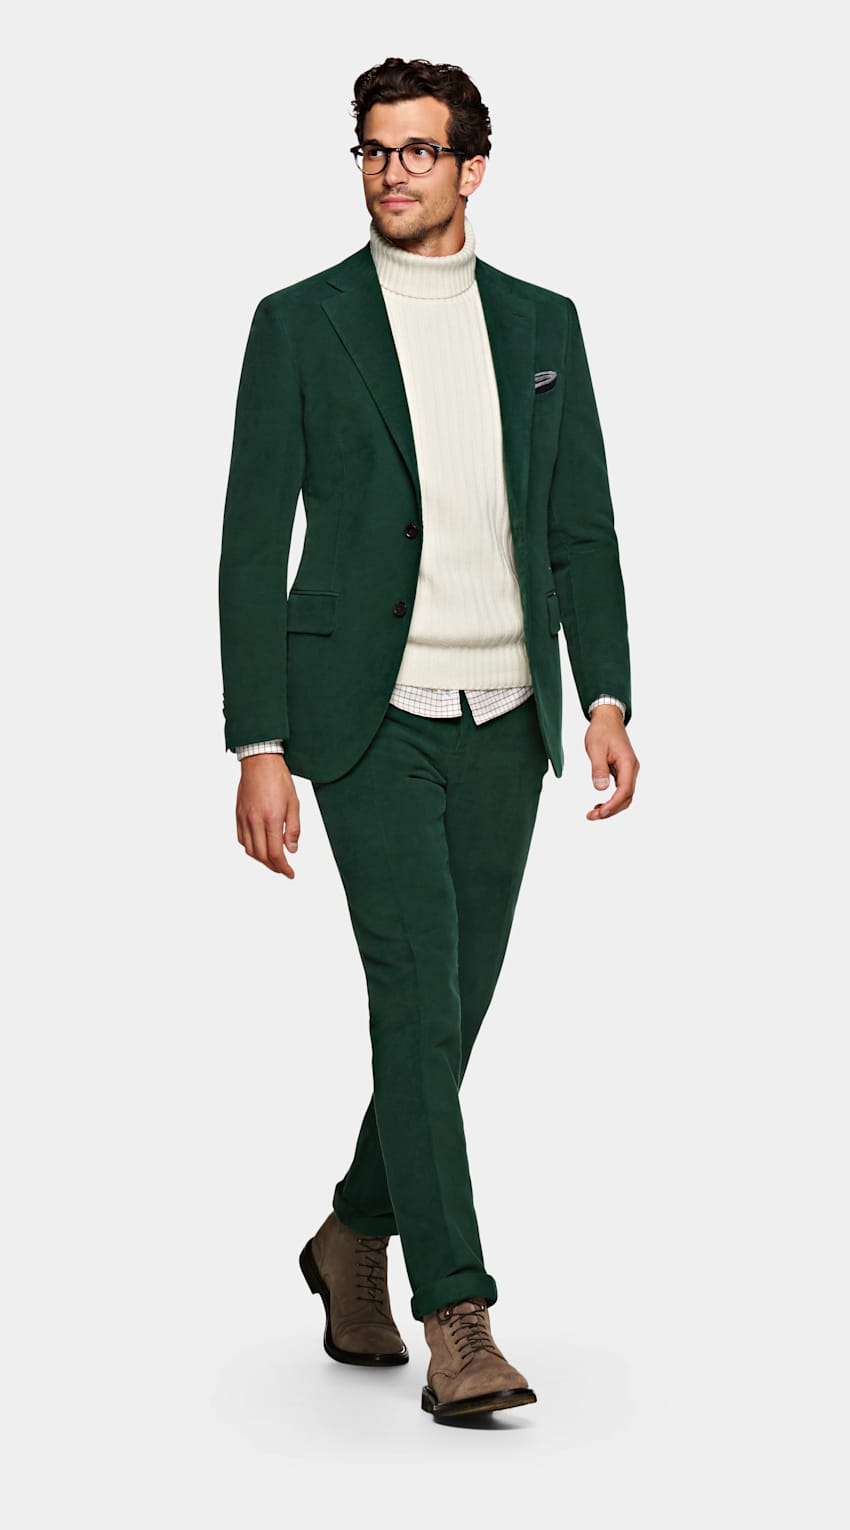 SUITSUPPLY  by Brisbane Moss, UK Jort Green Suit